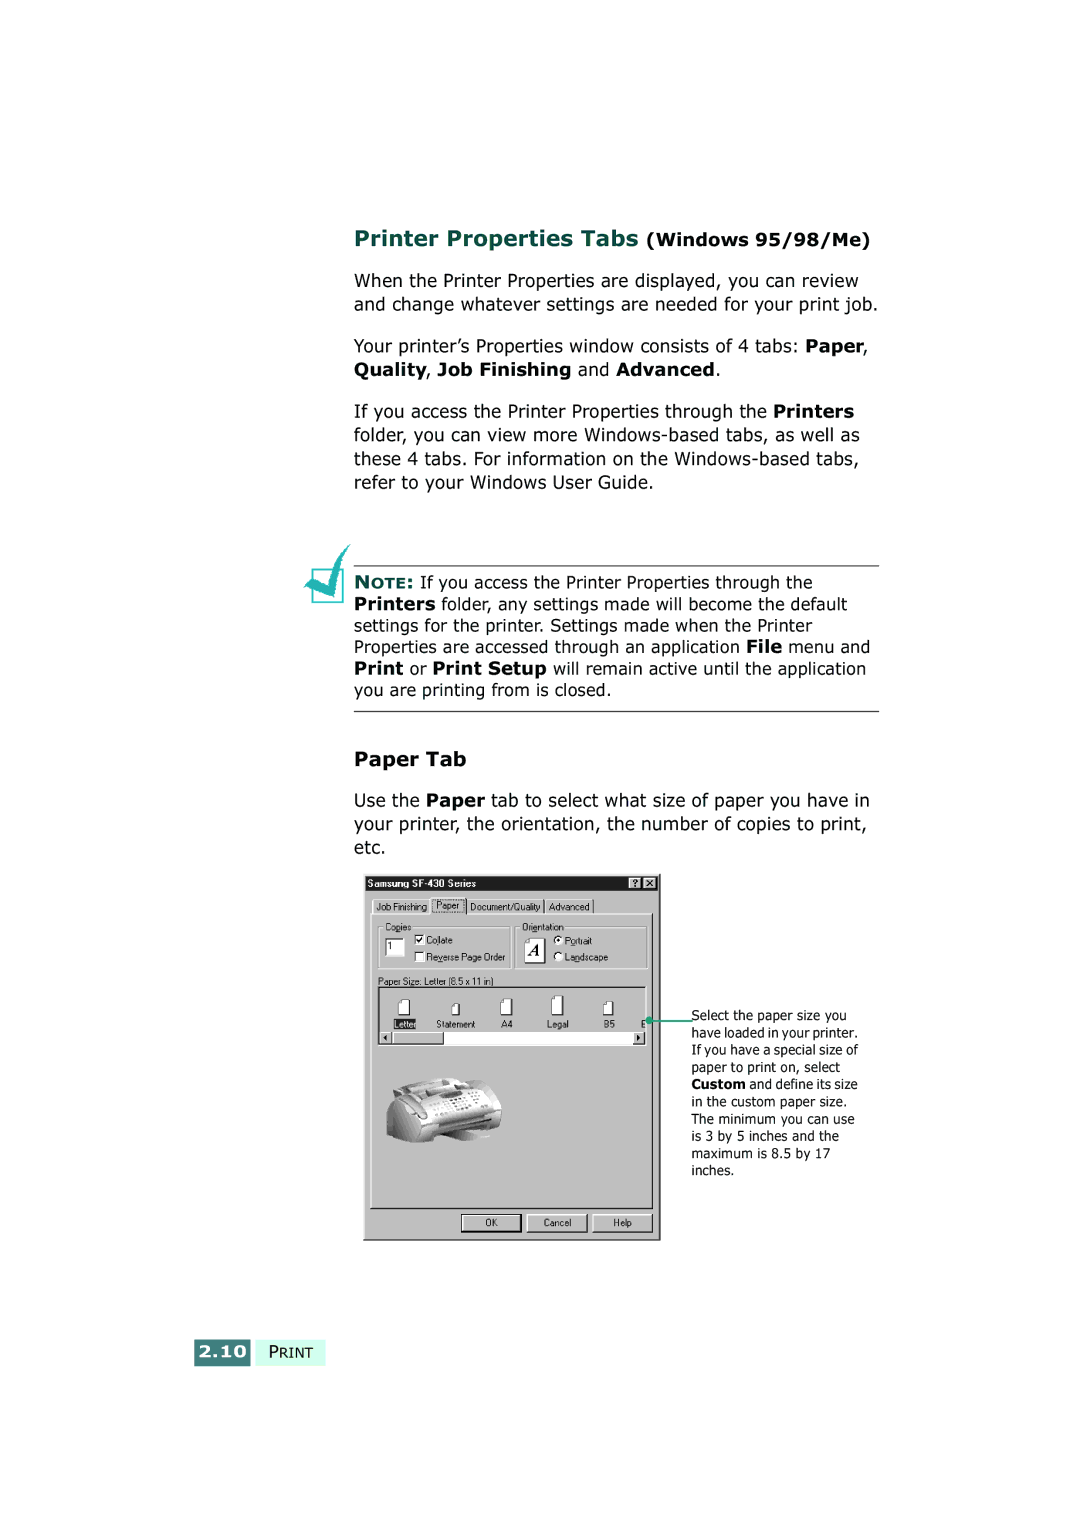 Samsung SF-430 manual Printer Properties Tabs Windows 95/98/Me, Paper Tab 